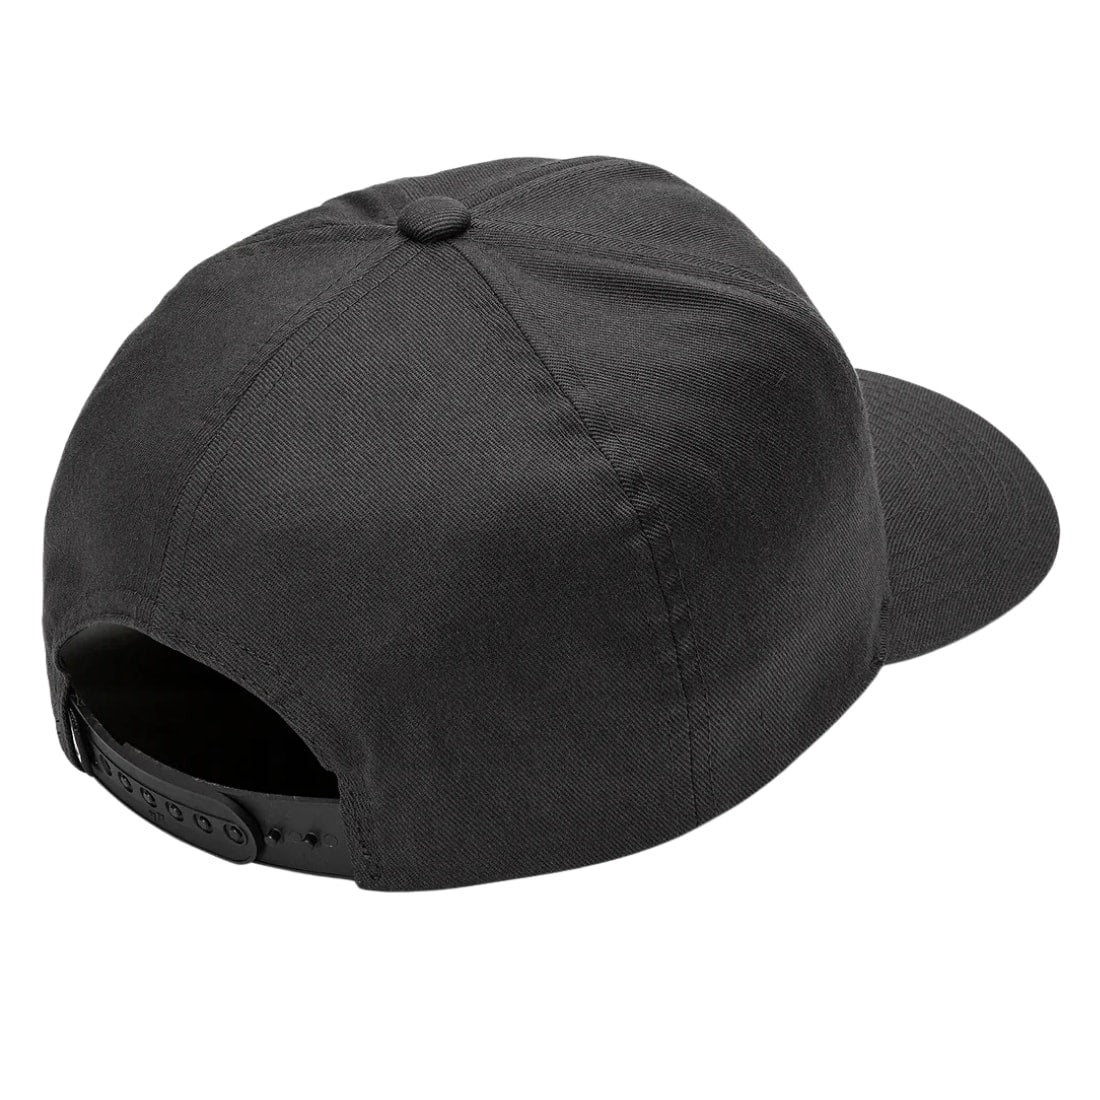 Volcom Demo Adjustable Cap Hat - Black - Strapback Cap by Volcom One Size